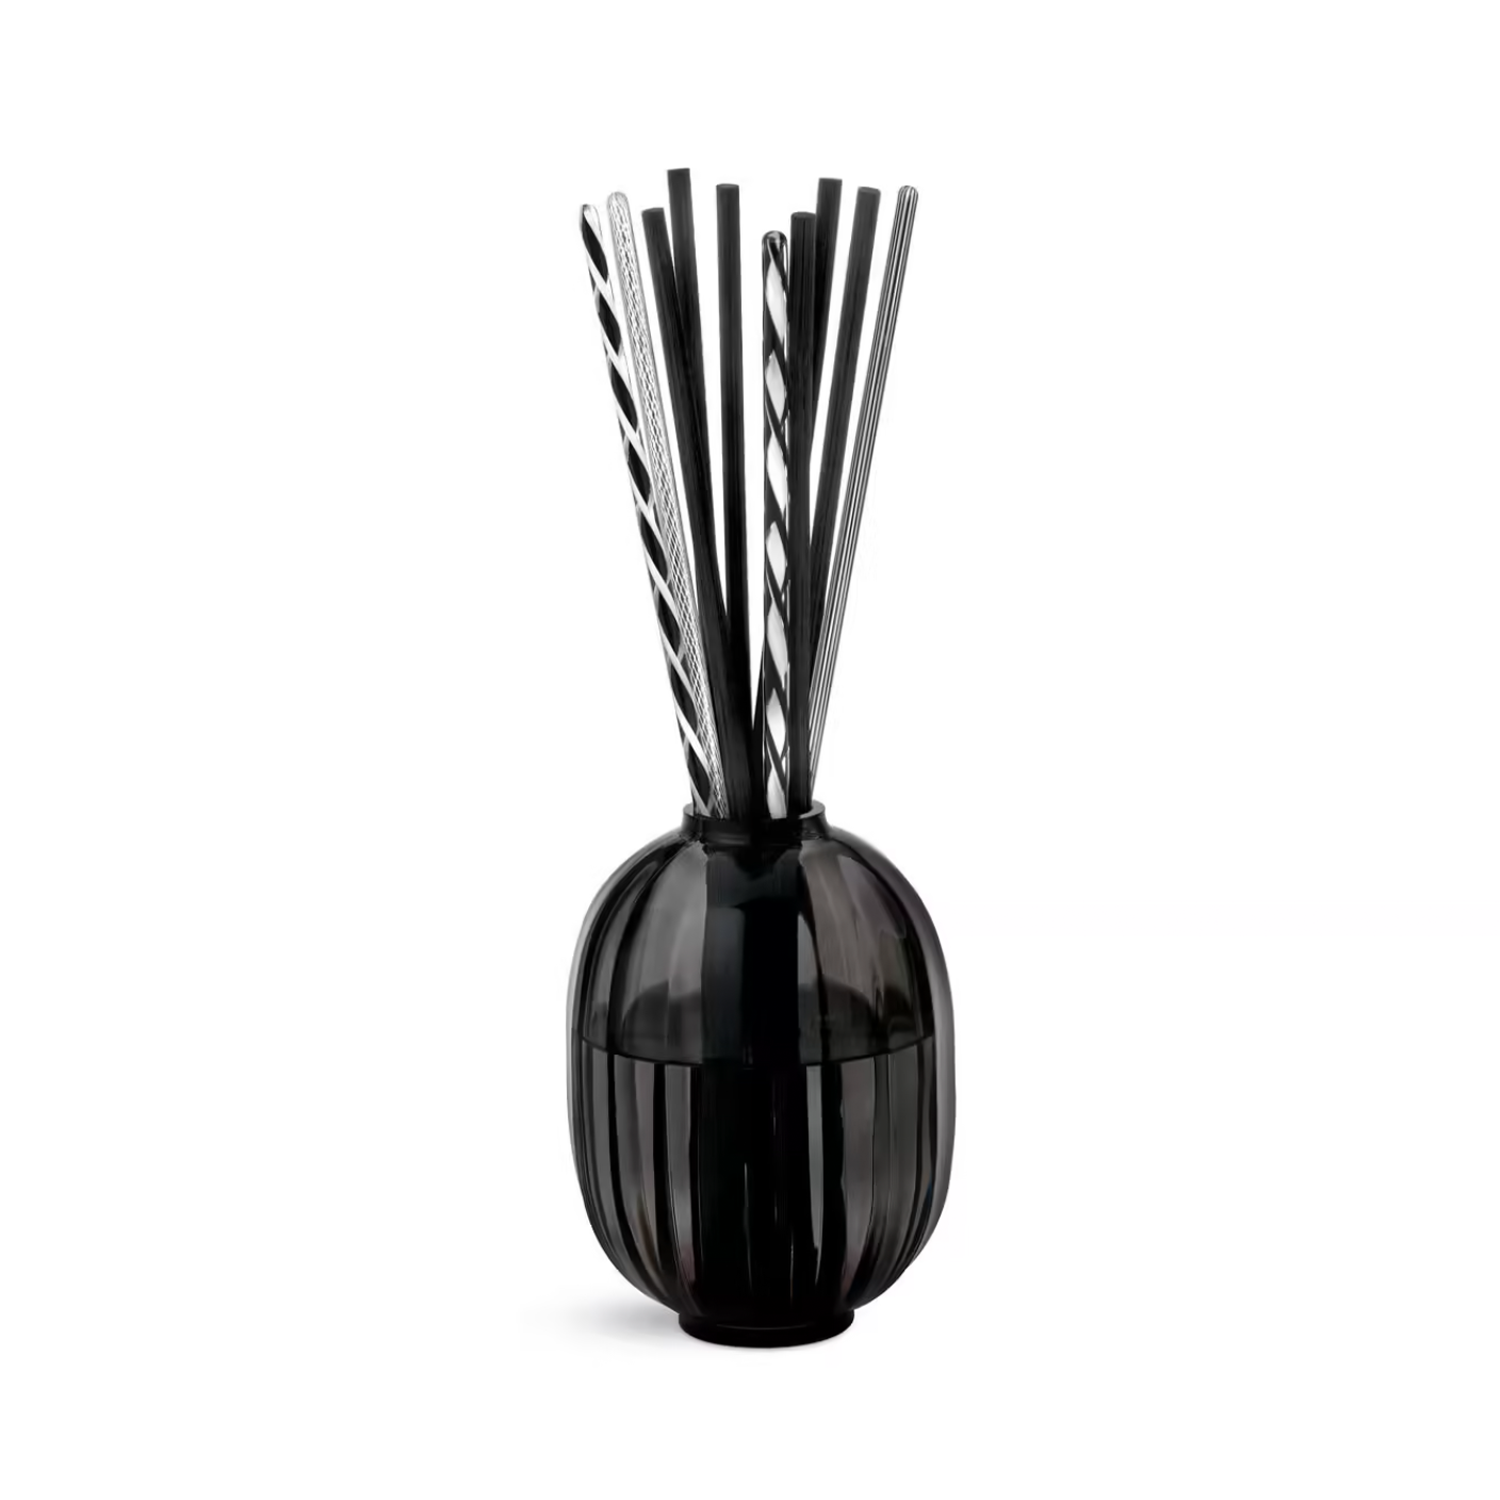 Black reed diffuser vessel